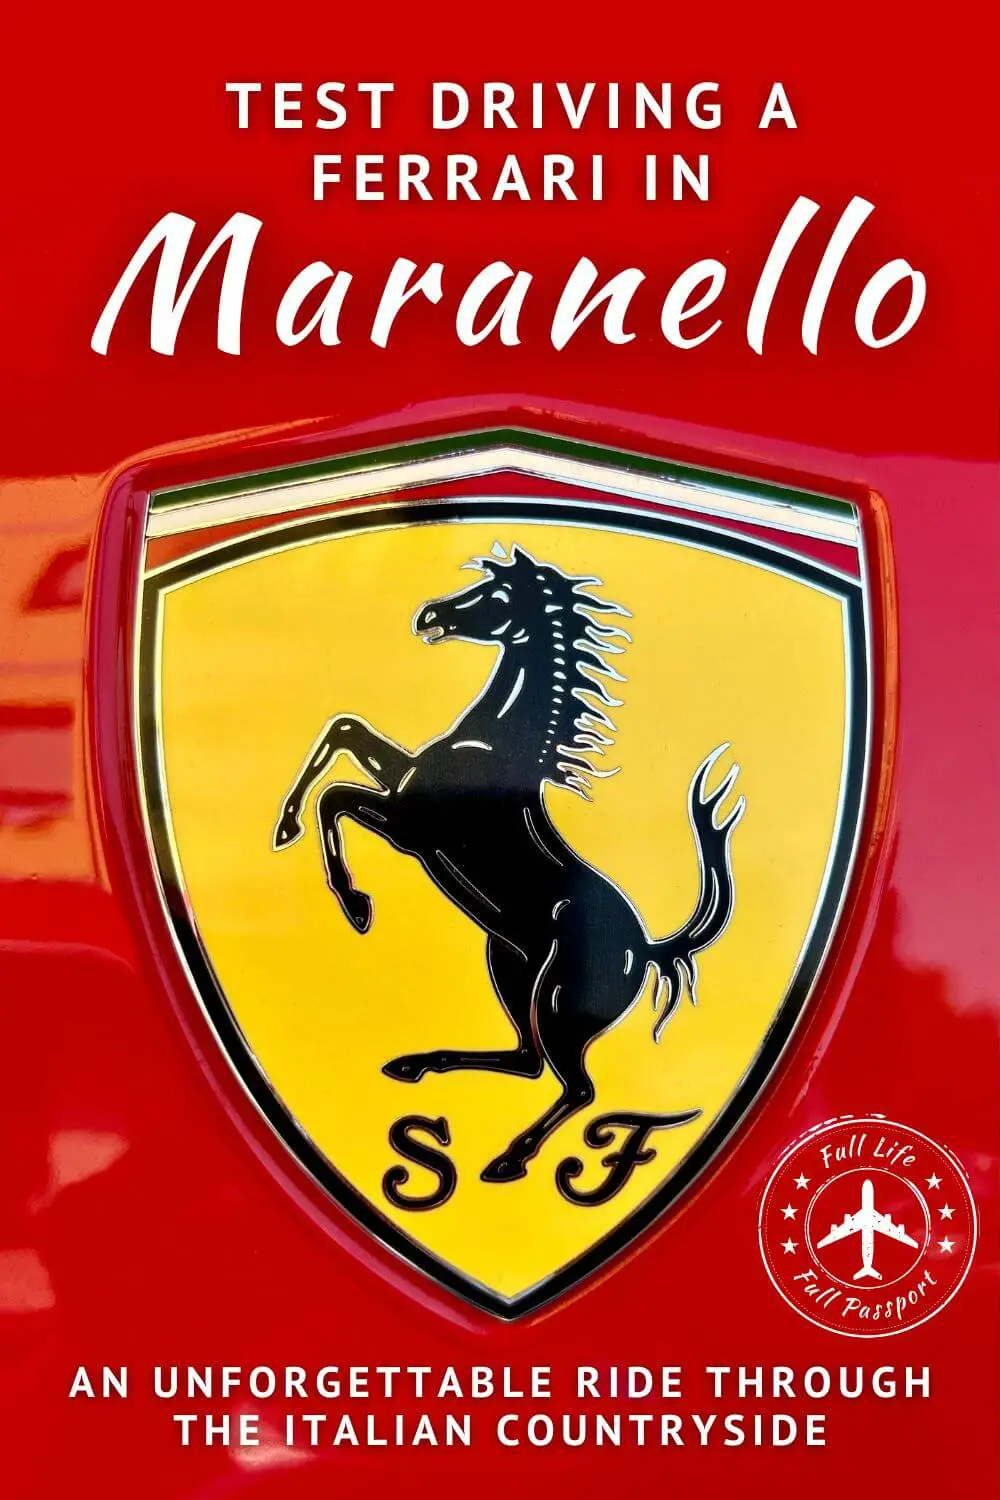 An Unforgettable Ferrari Drive Through the Hills of Italy